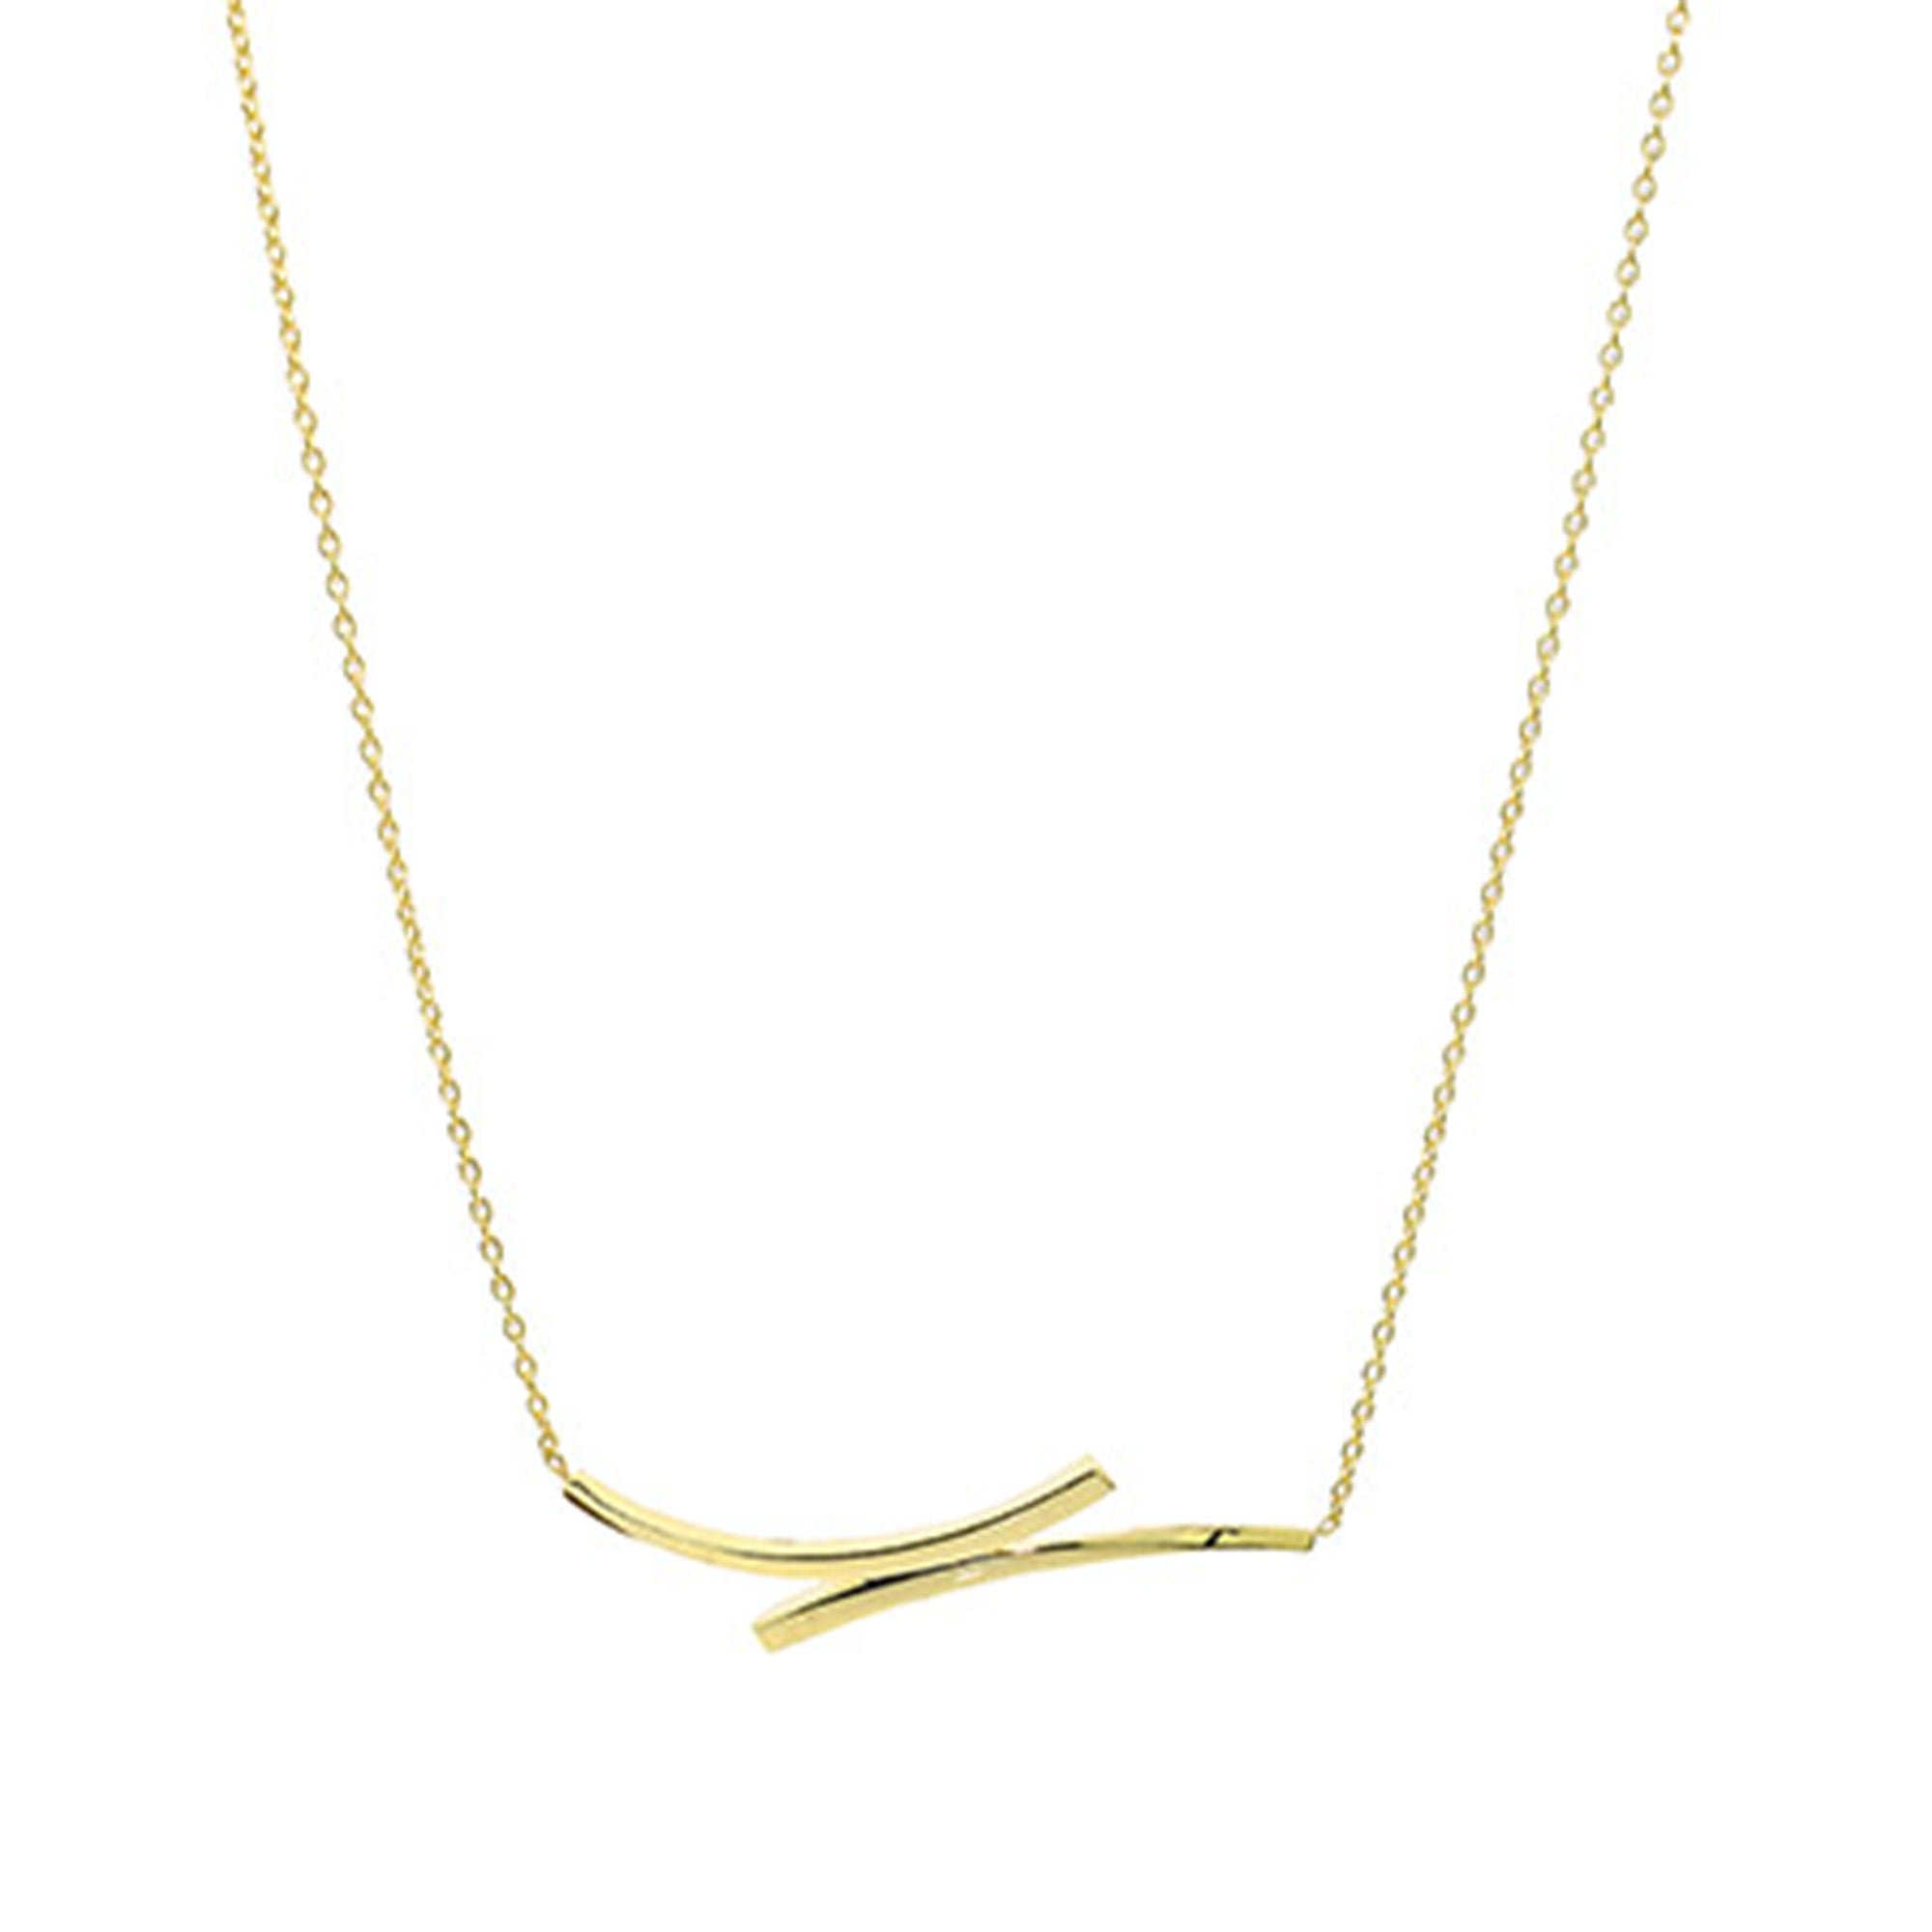 Séchic 14k Horizontal Curved Bars Pendant Necklace 18" - chicjewelry4u.com